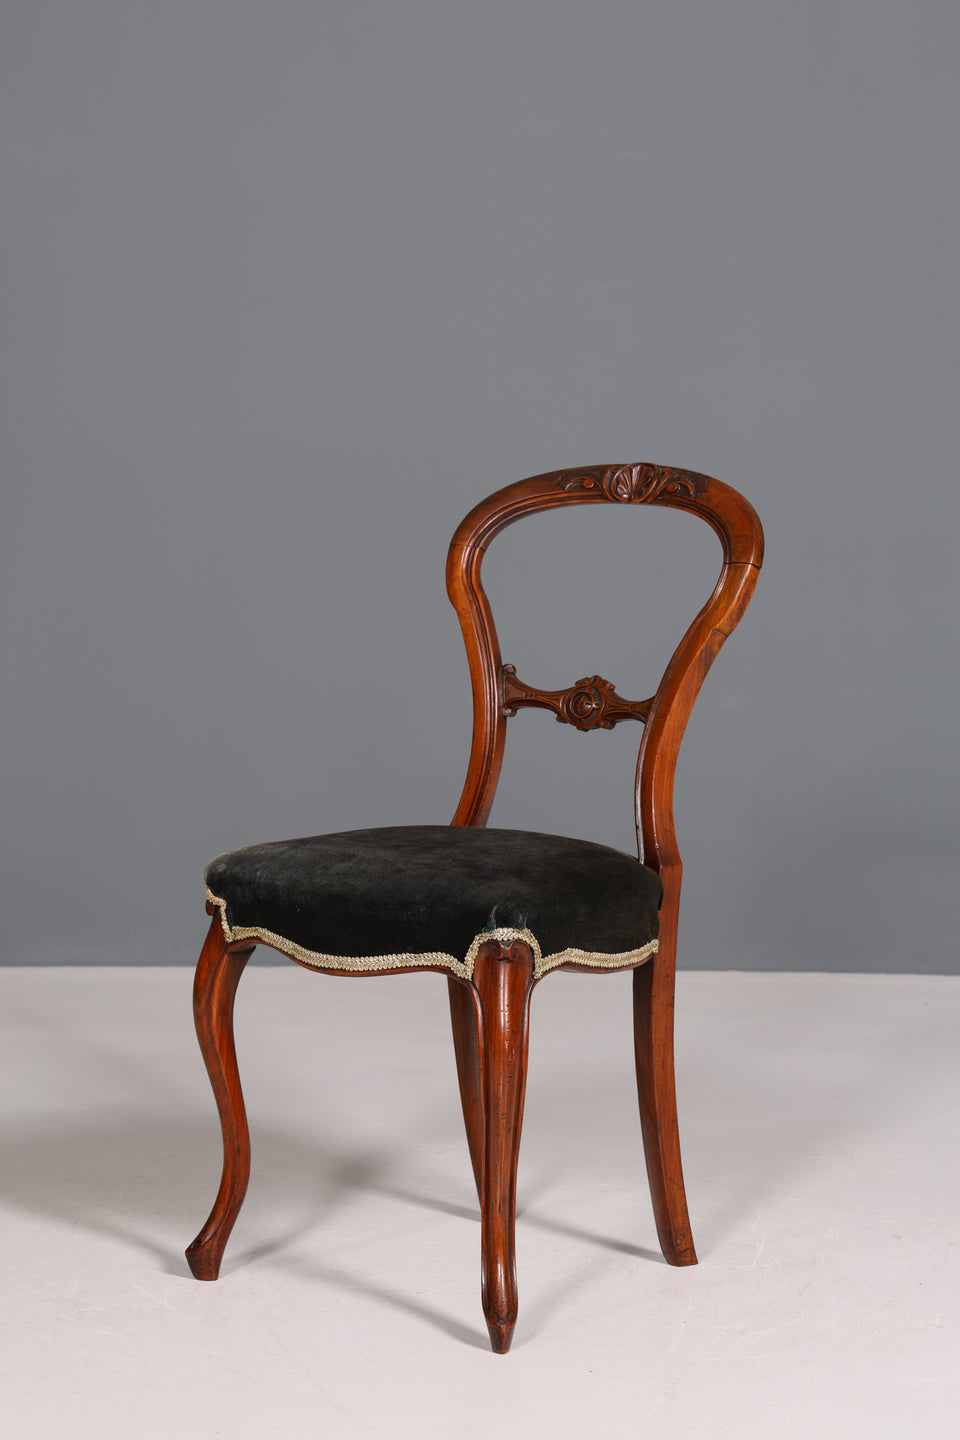 Traumhafter Louis Philippe um 1880 Biedermeier Stuhl Antik Sekretär Stuhl